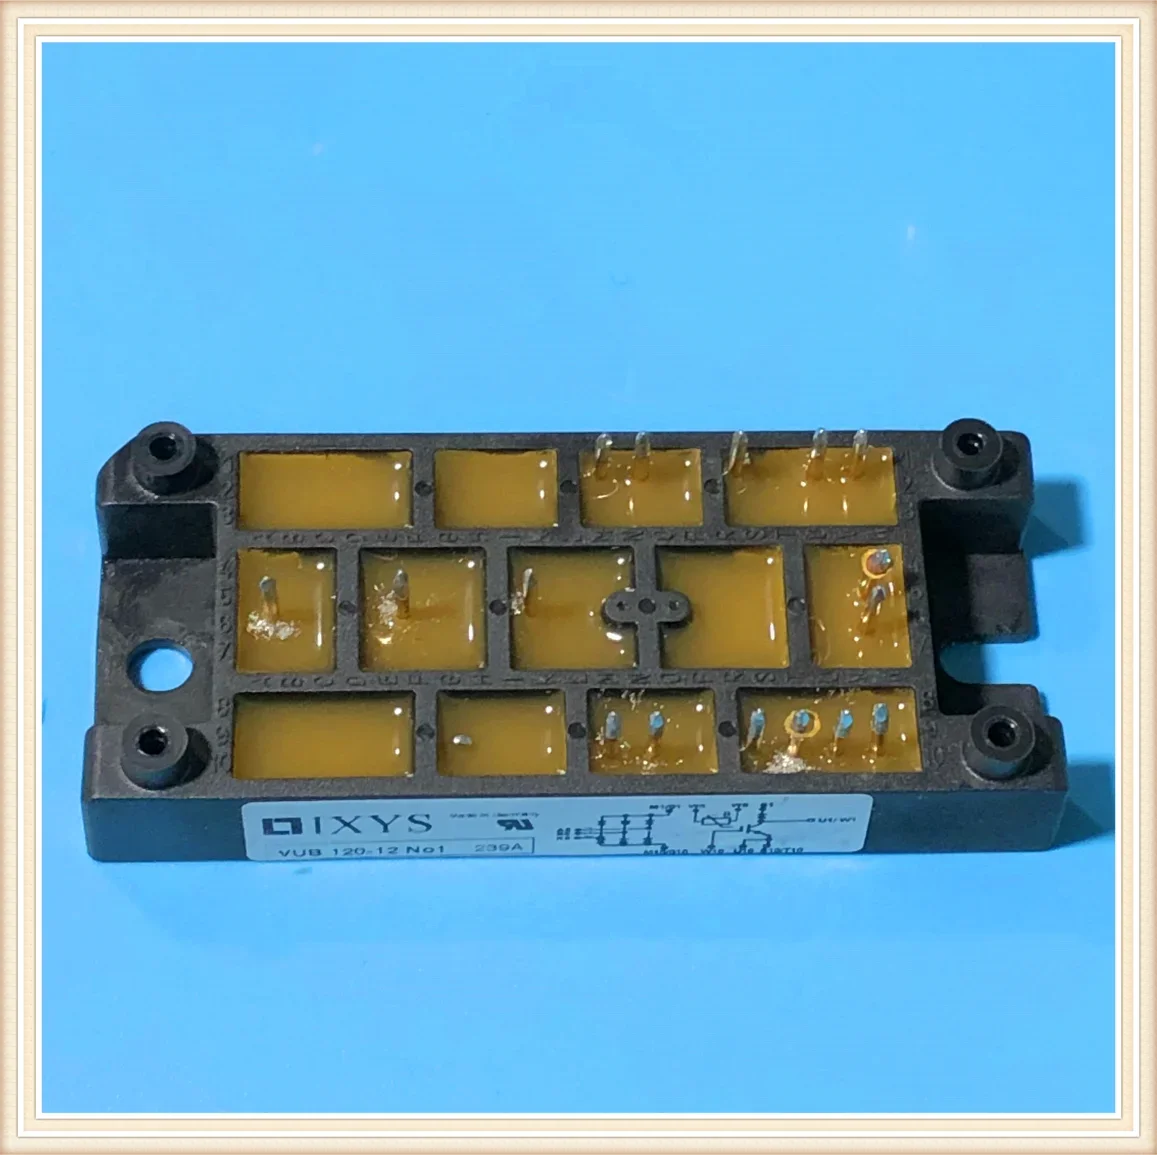 

VUB120-12N01-16N02, M430-440 frequency converter with brake rectifier, bridge, chopper diode